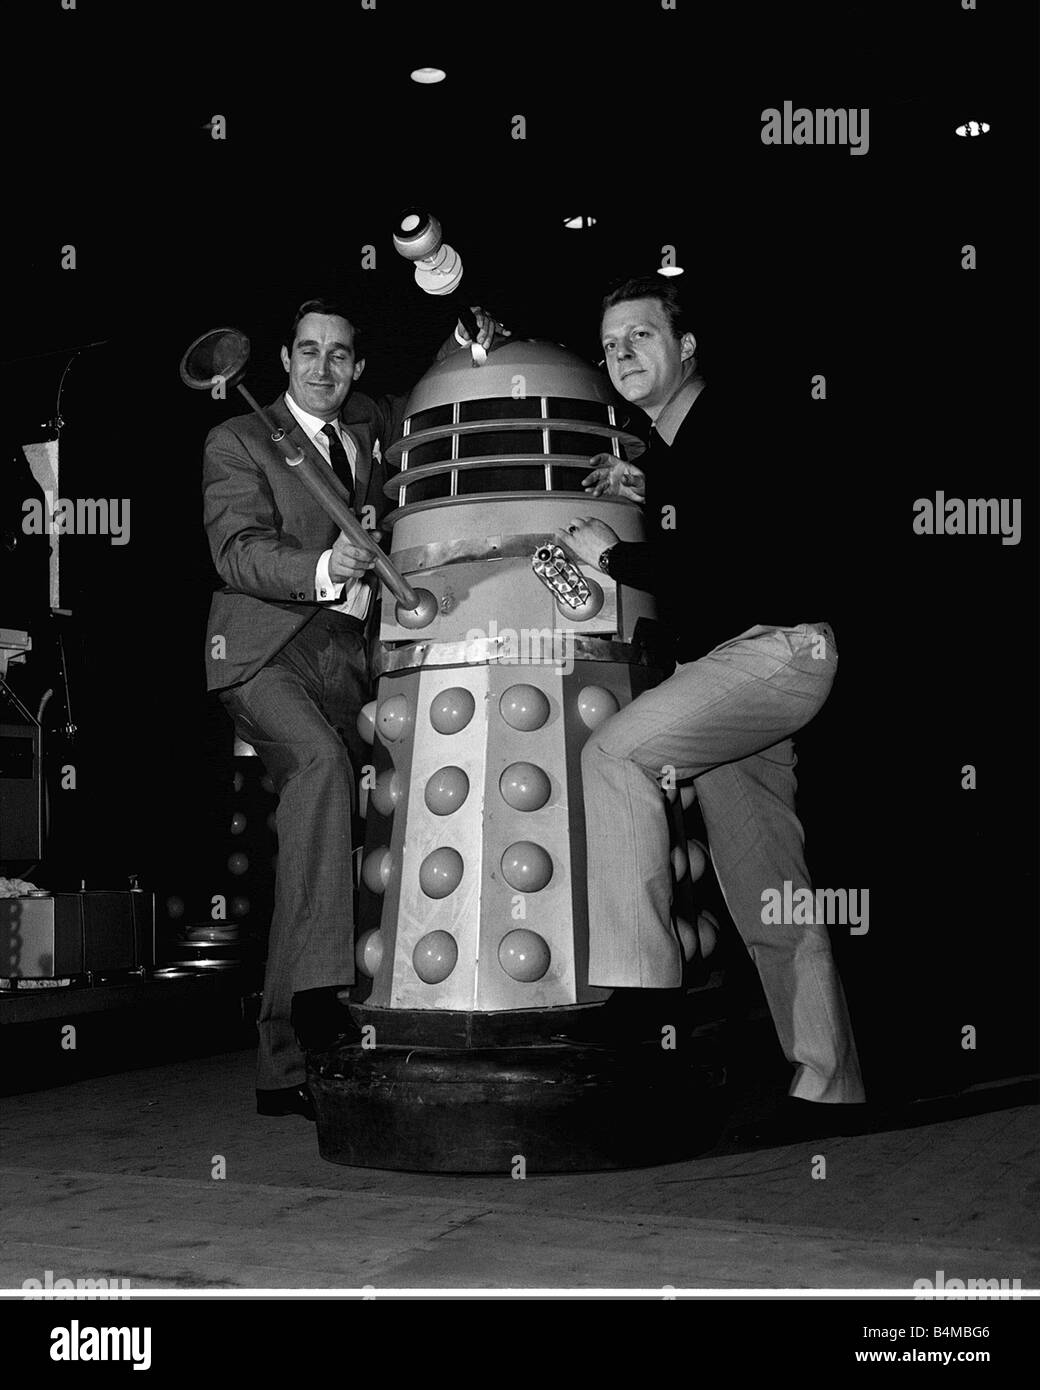 Terry Nation Dezember 1964 und Raymond Cusick mit Dalek Fernsehprogramm Doctor Who Roboter Science Fiction Scifi 1960er Jahre Daleks Dr Who Stockfoto